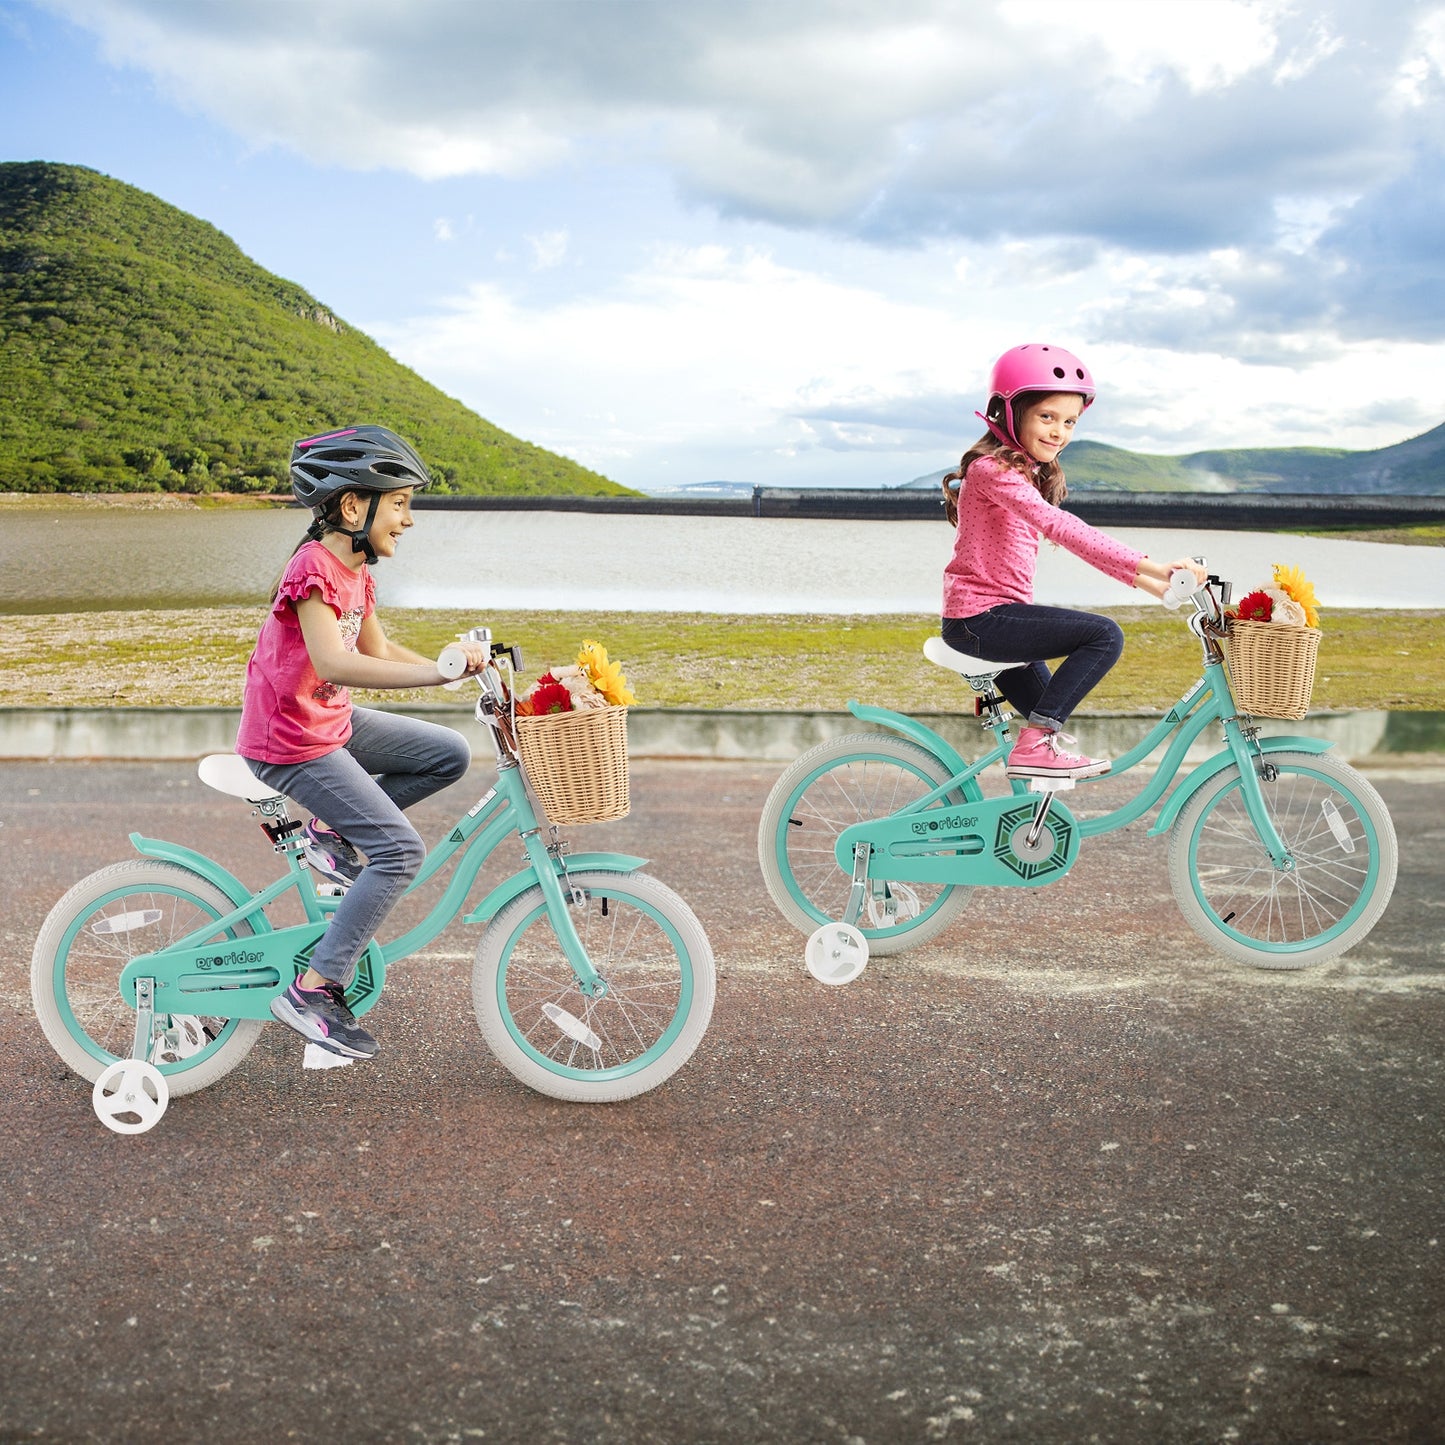 16-Inch Kids Bike with Training Wheels and Adjustable Handlebar Seat-Green